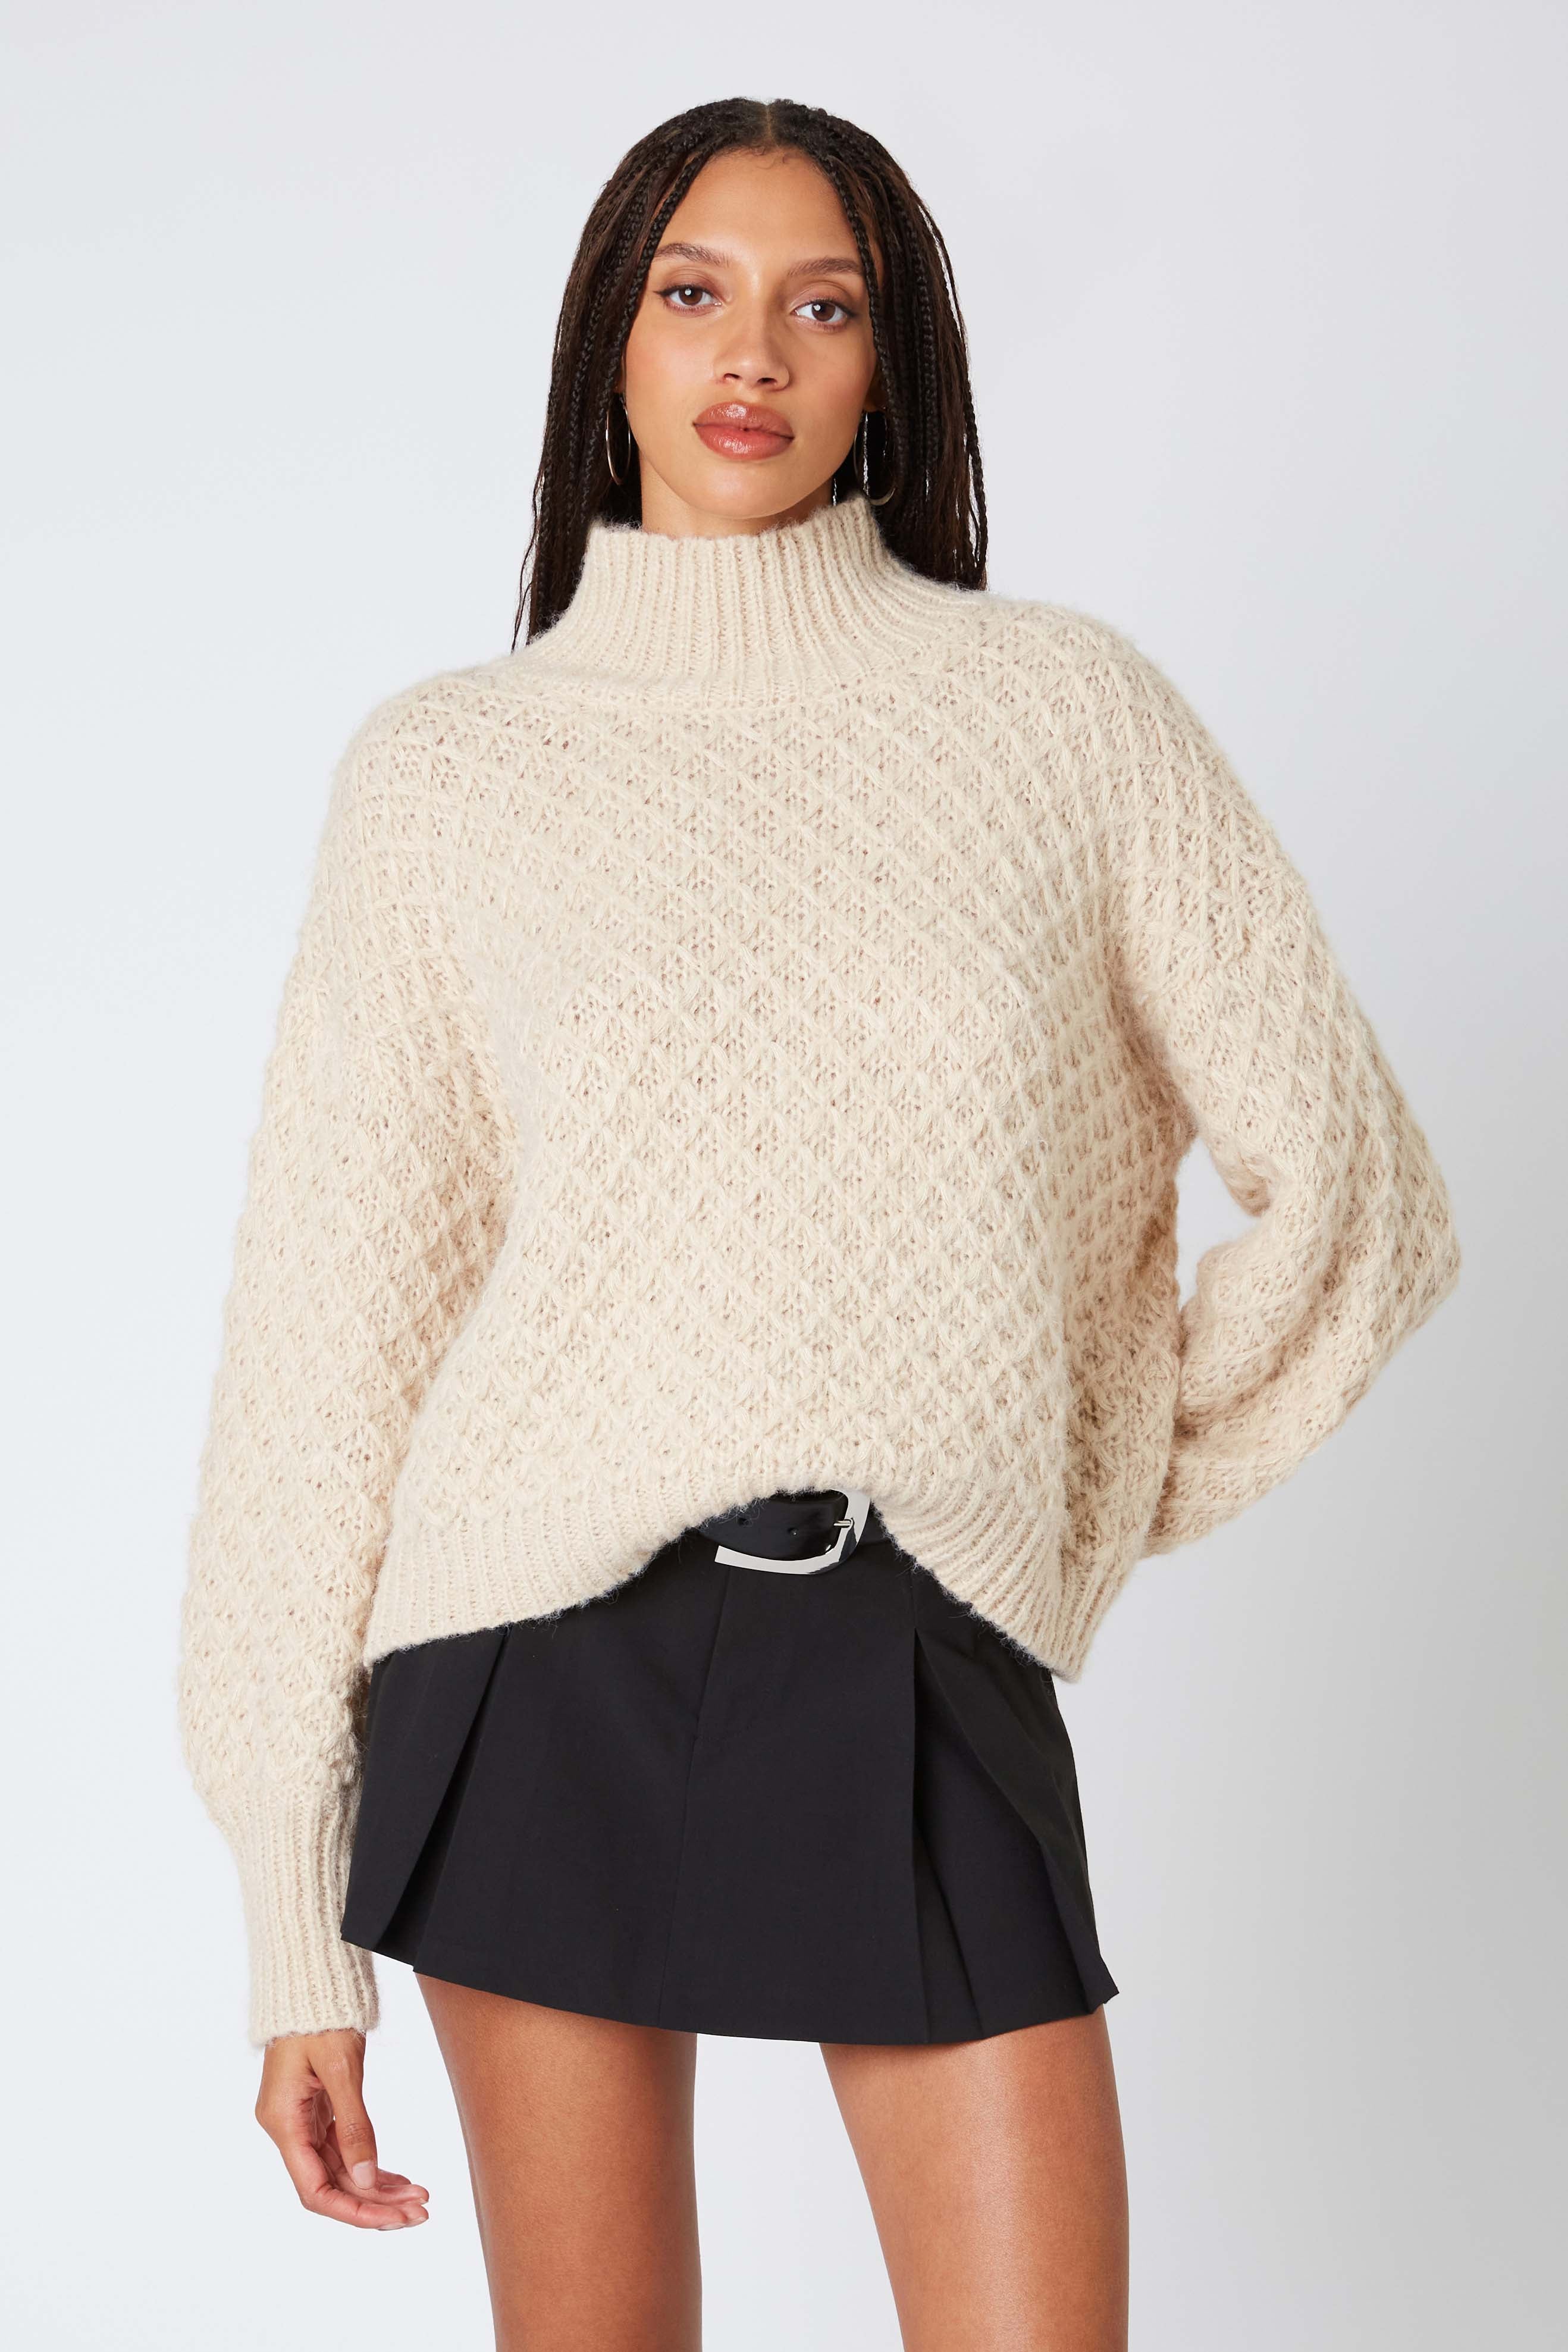 Knit Mockneck Sweater in Ecru Front View